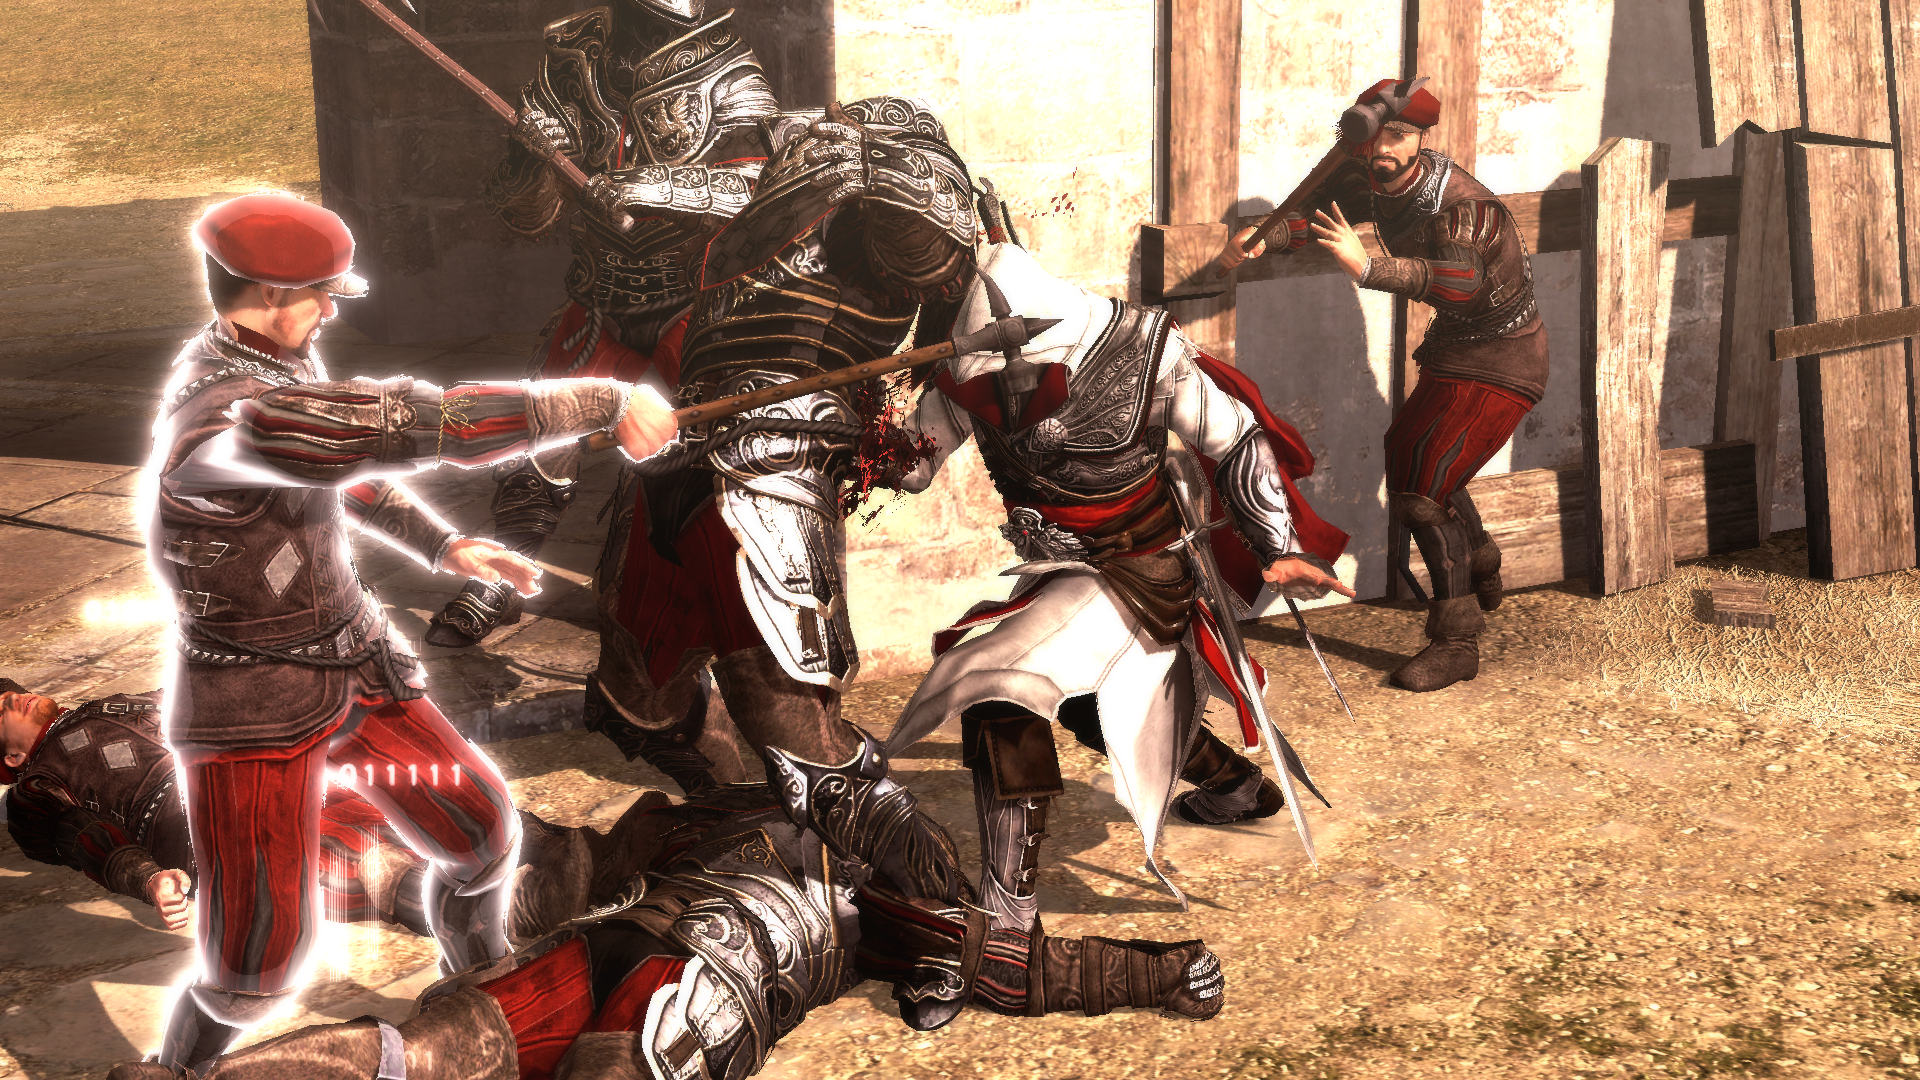 Assassin's Creed: Brotherhood, Assassin's Creed Wiki